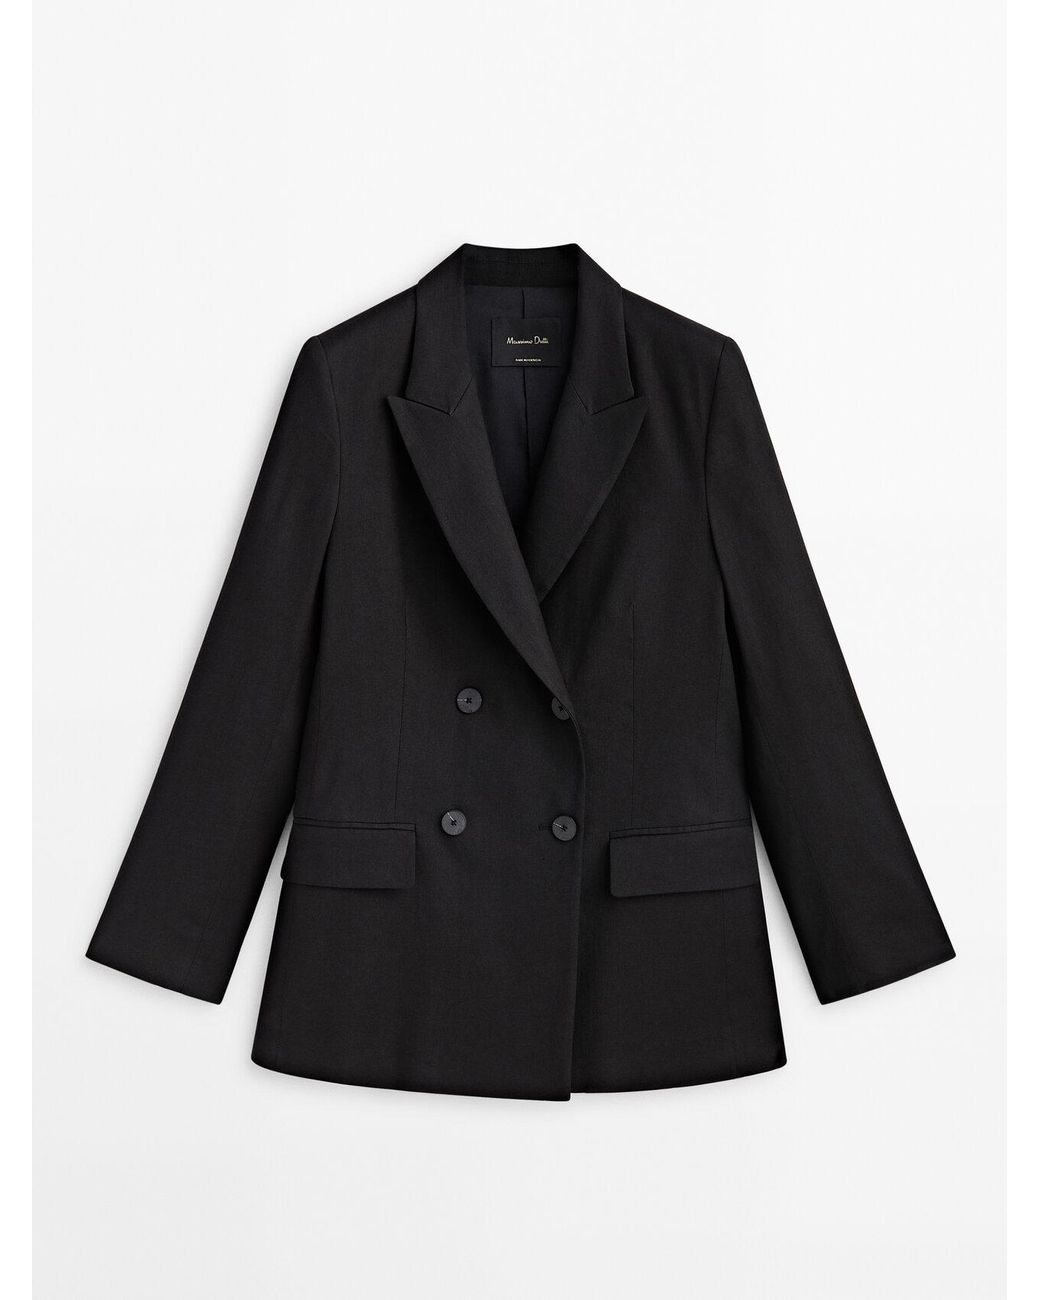 MASSIMO DUTTI Linen Blend Stretch Suit Blazer in Black | Lyst